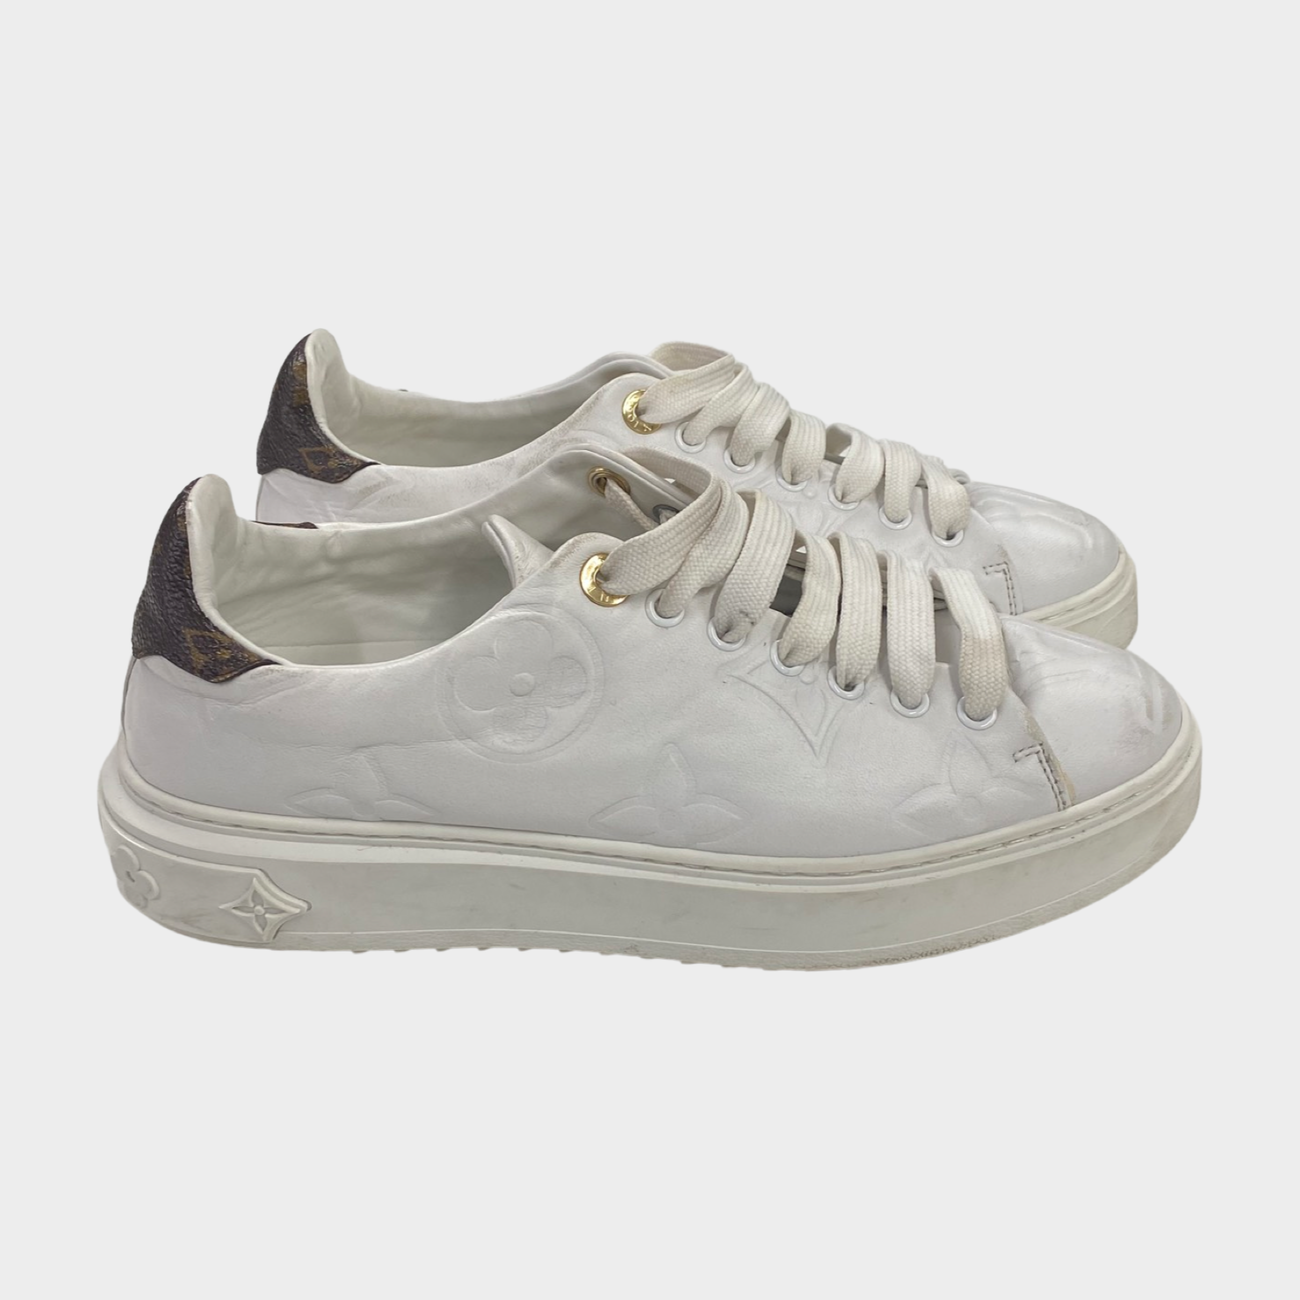 Louis Vuitton LV monogram sneakers trainers women shoes white